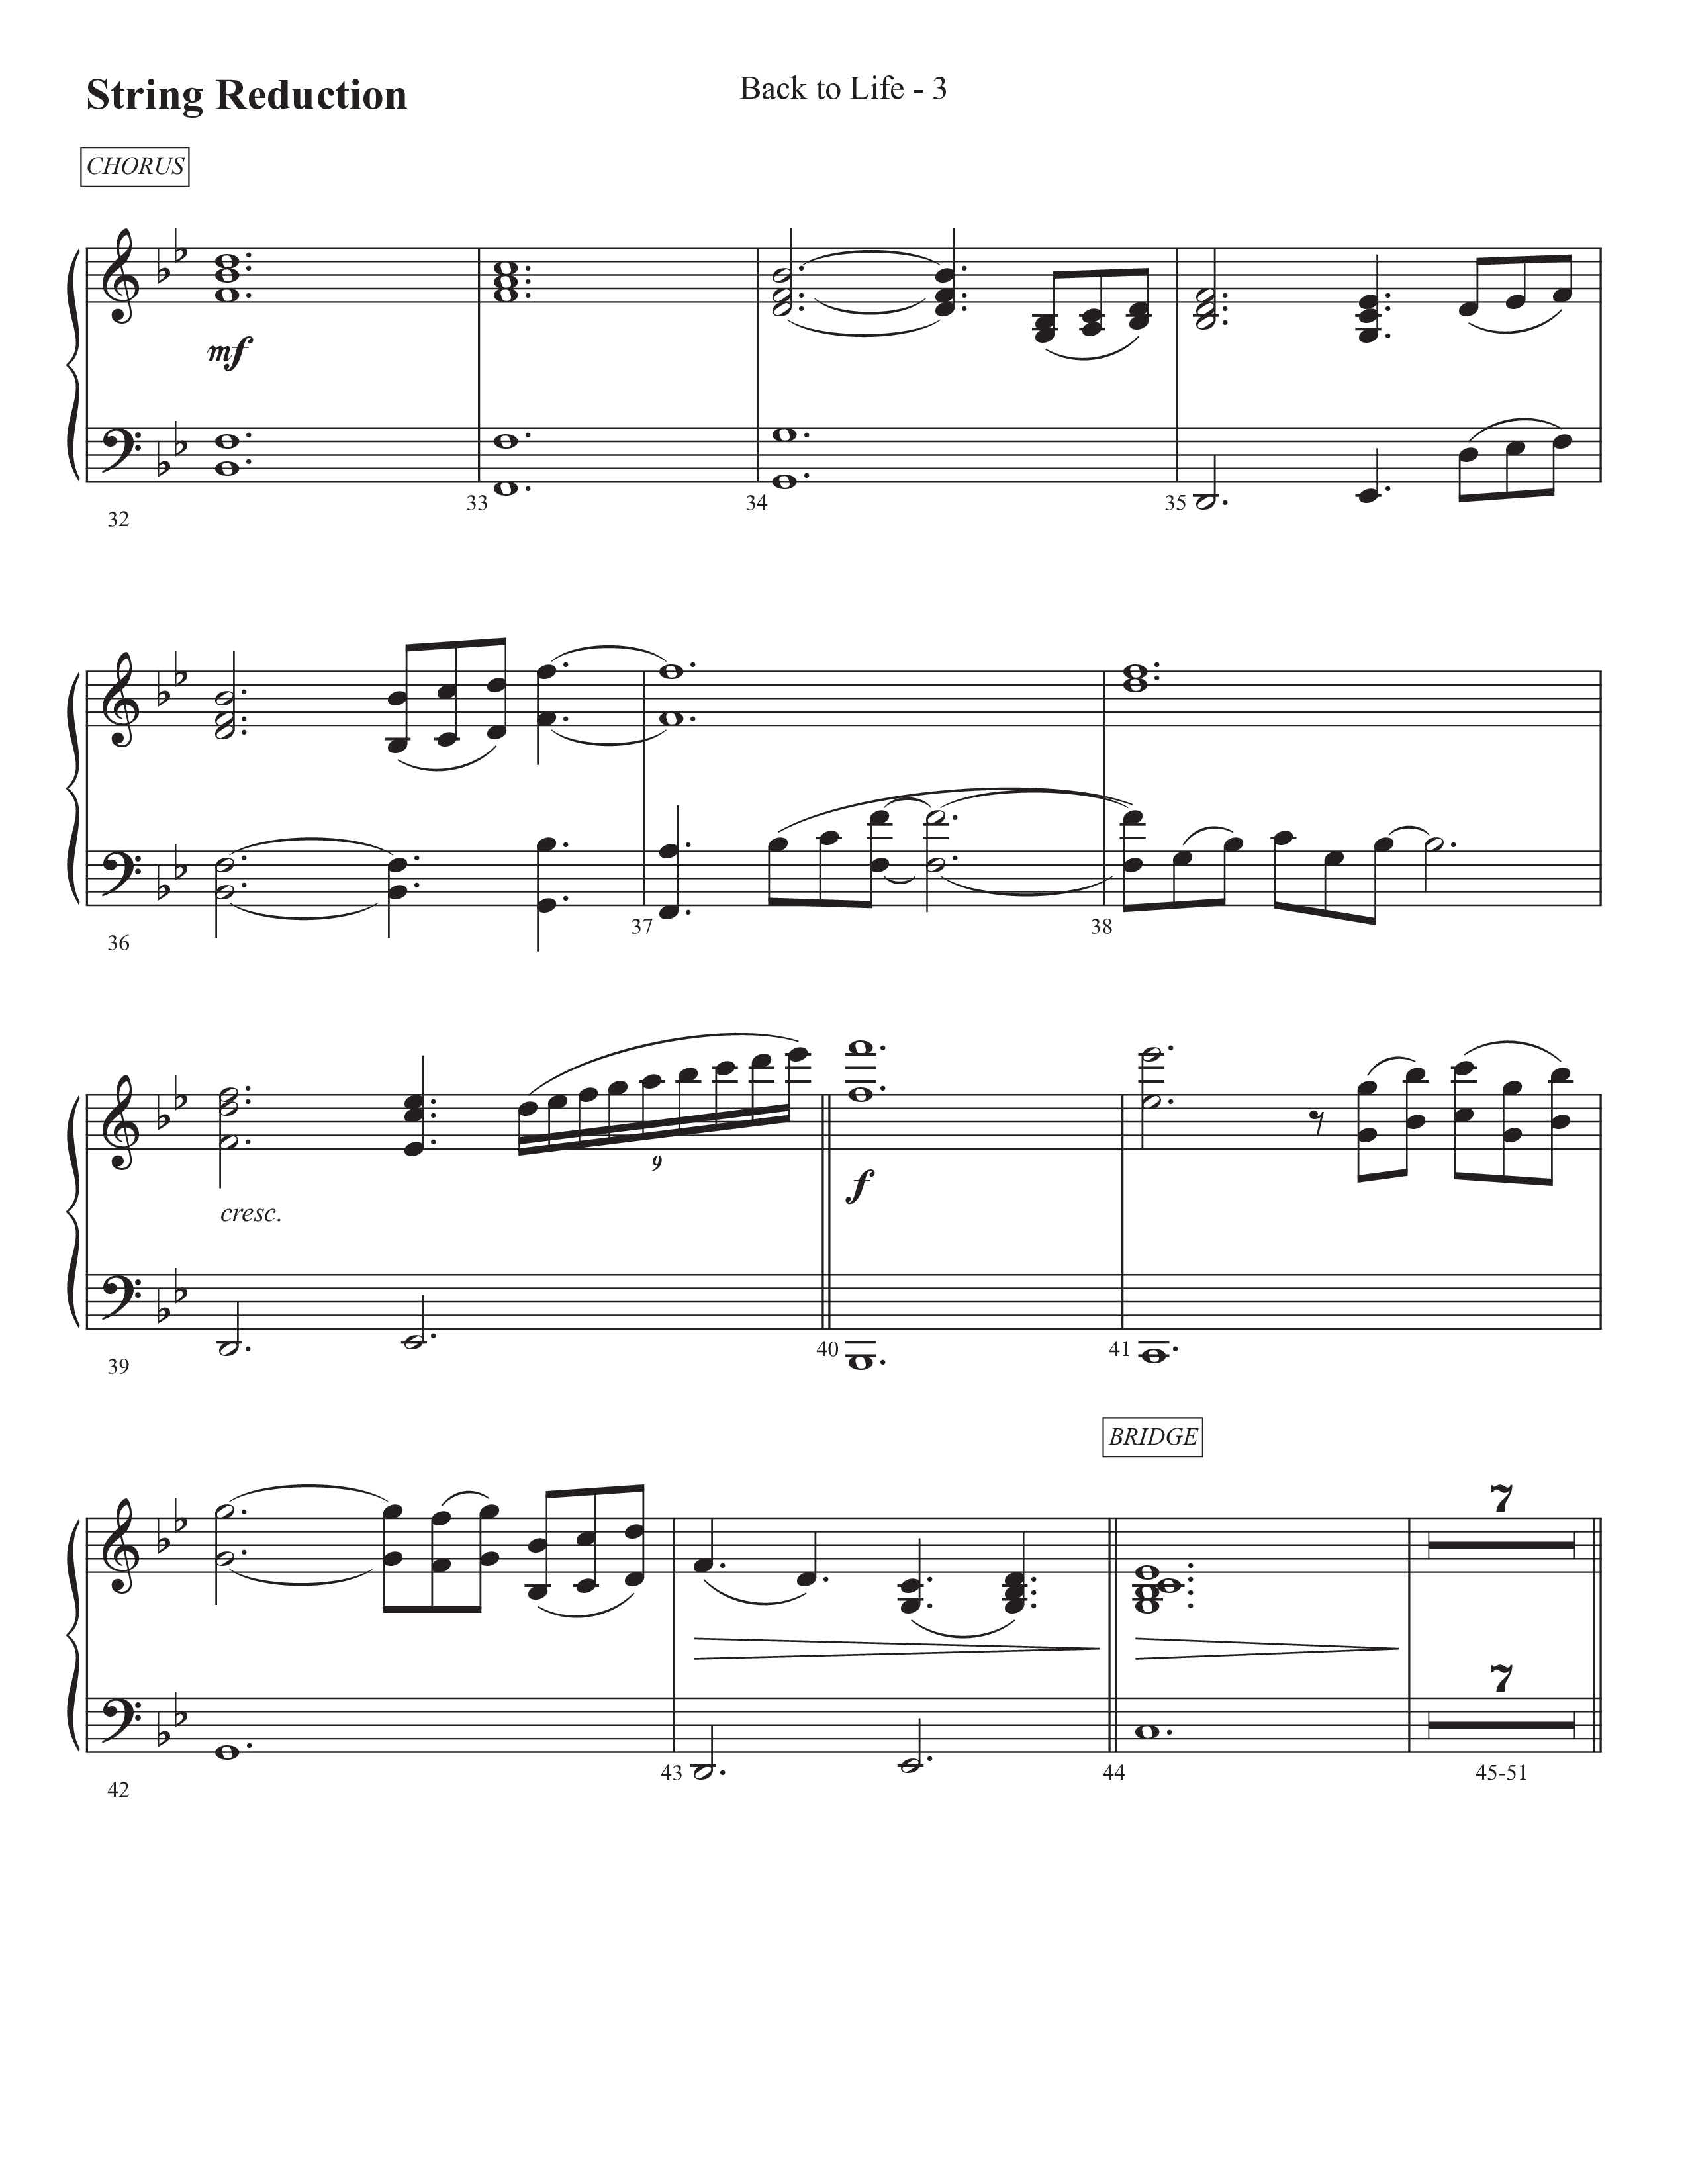 Back To Life (Choral Anthem SATB) String Reduction (Prestonwood Worship / Prestonwood Choir / Arr. Carson Wagner)